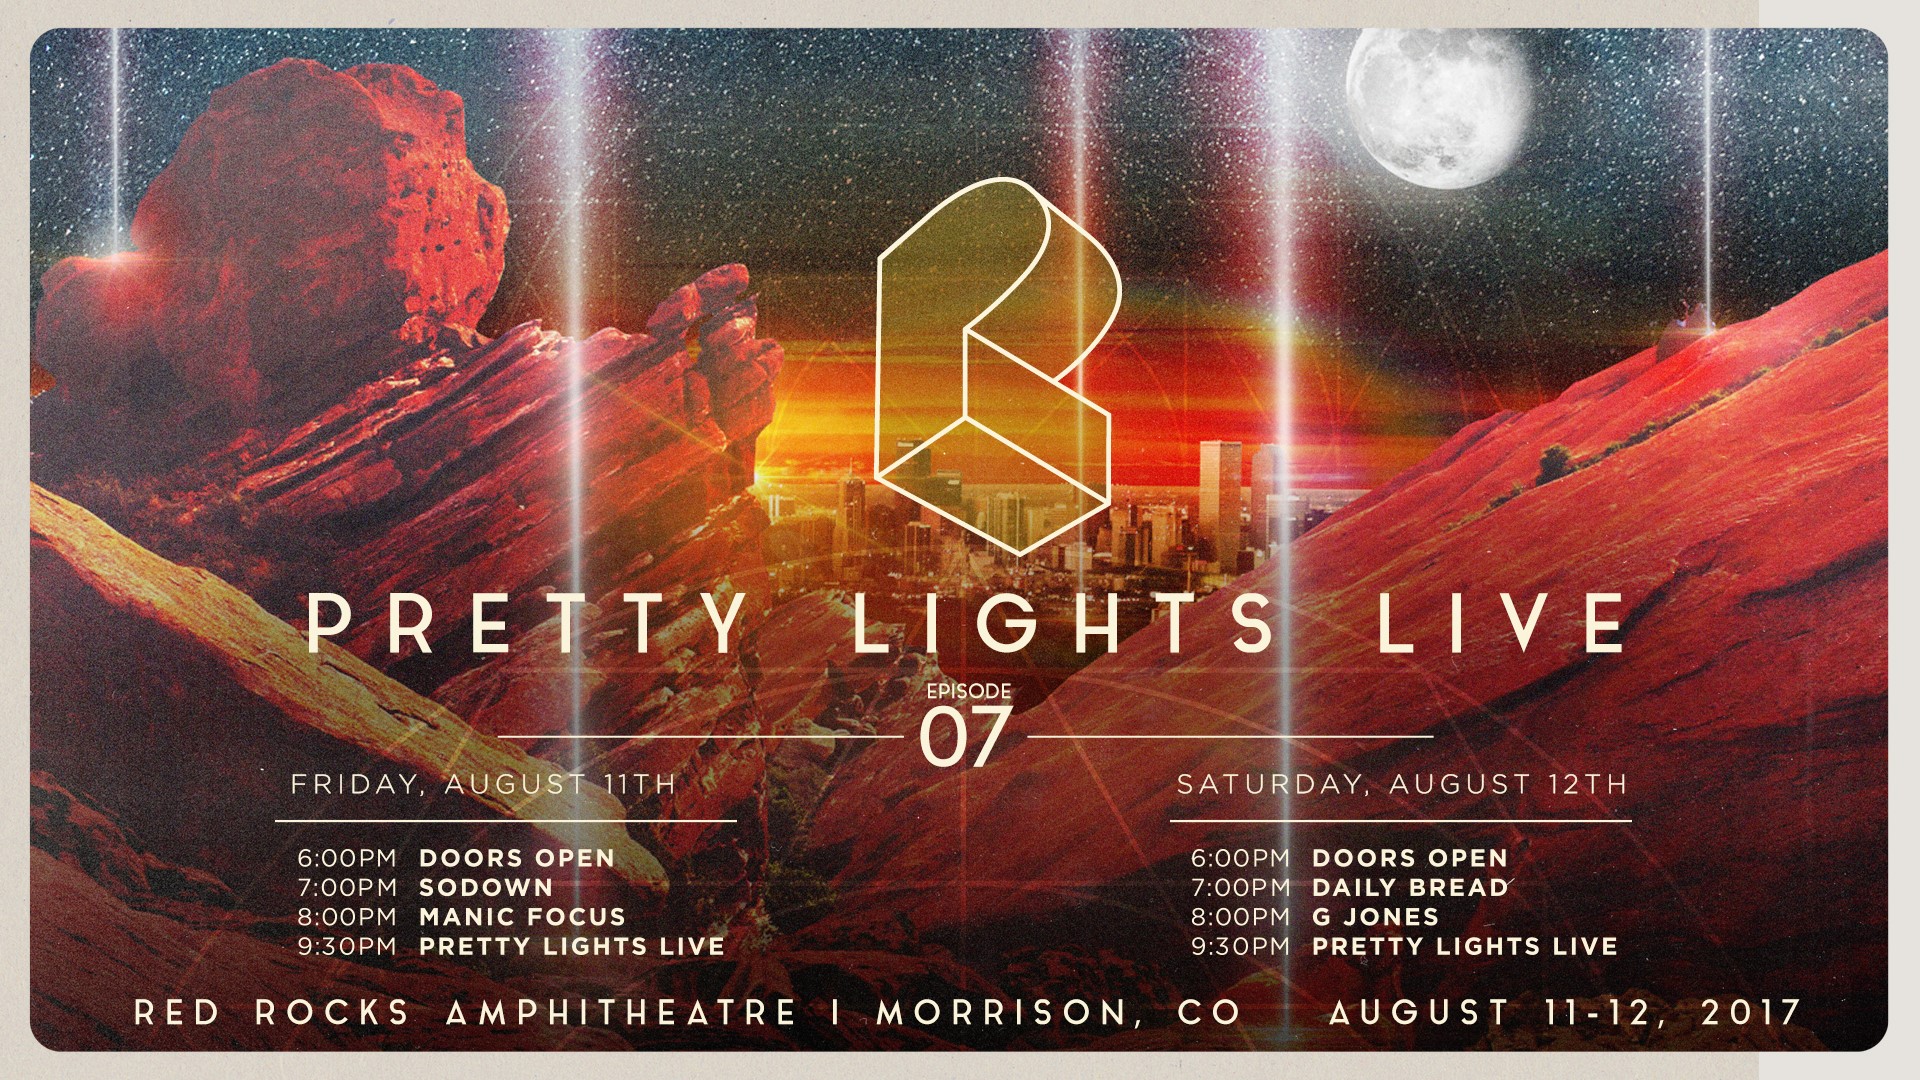 Pretty Lights Live Stream from Red Rocks Amphitheatre via YouTube